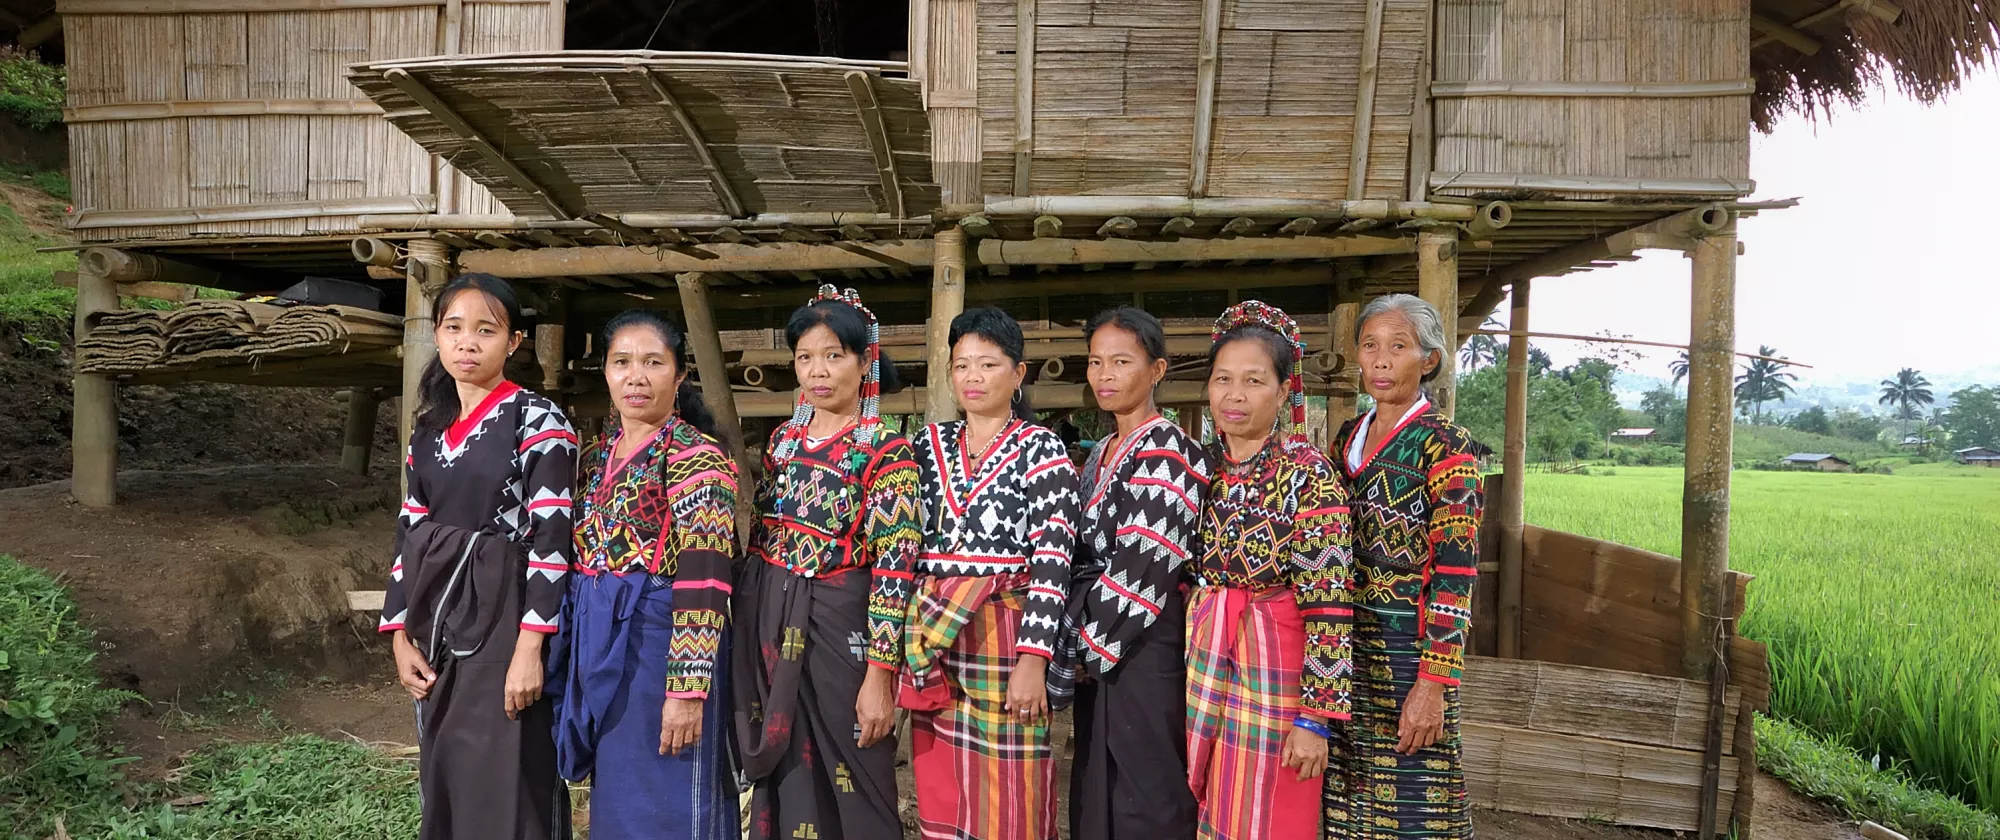 T’nalak weavers near Lake Sebu, Philippines